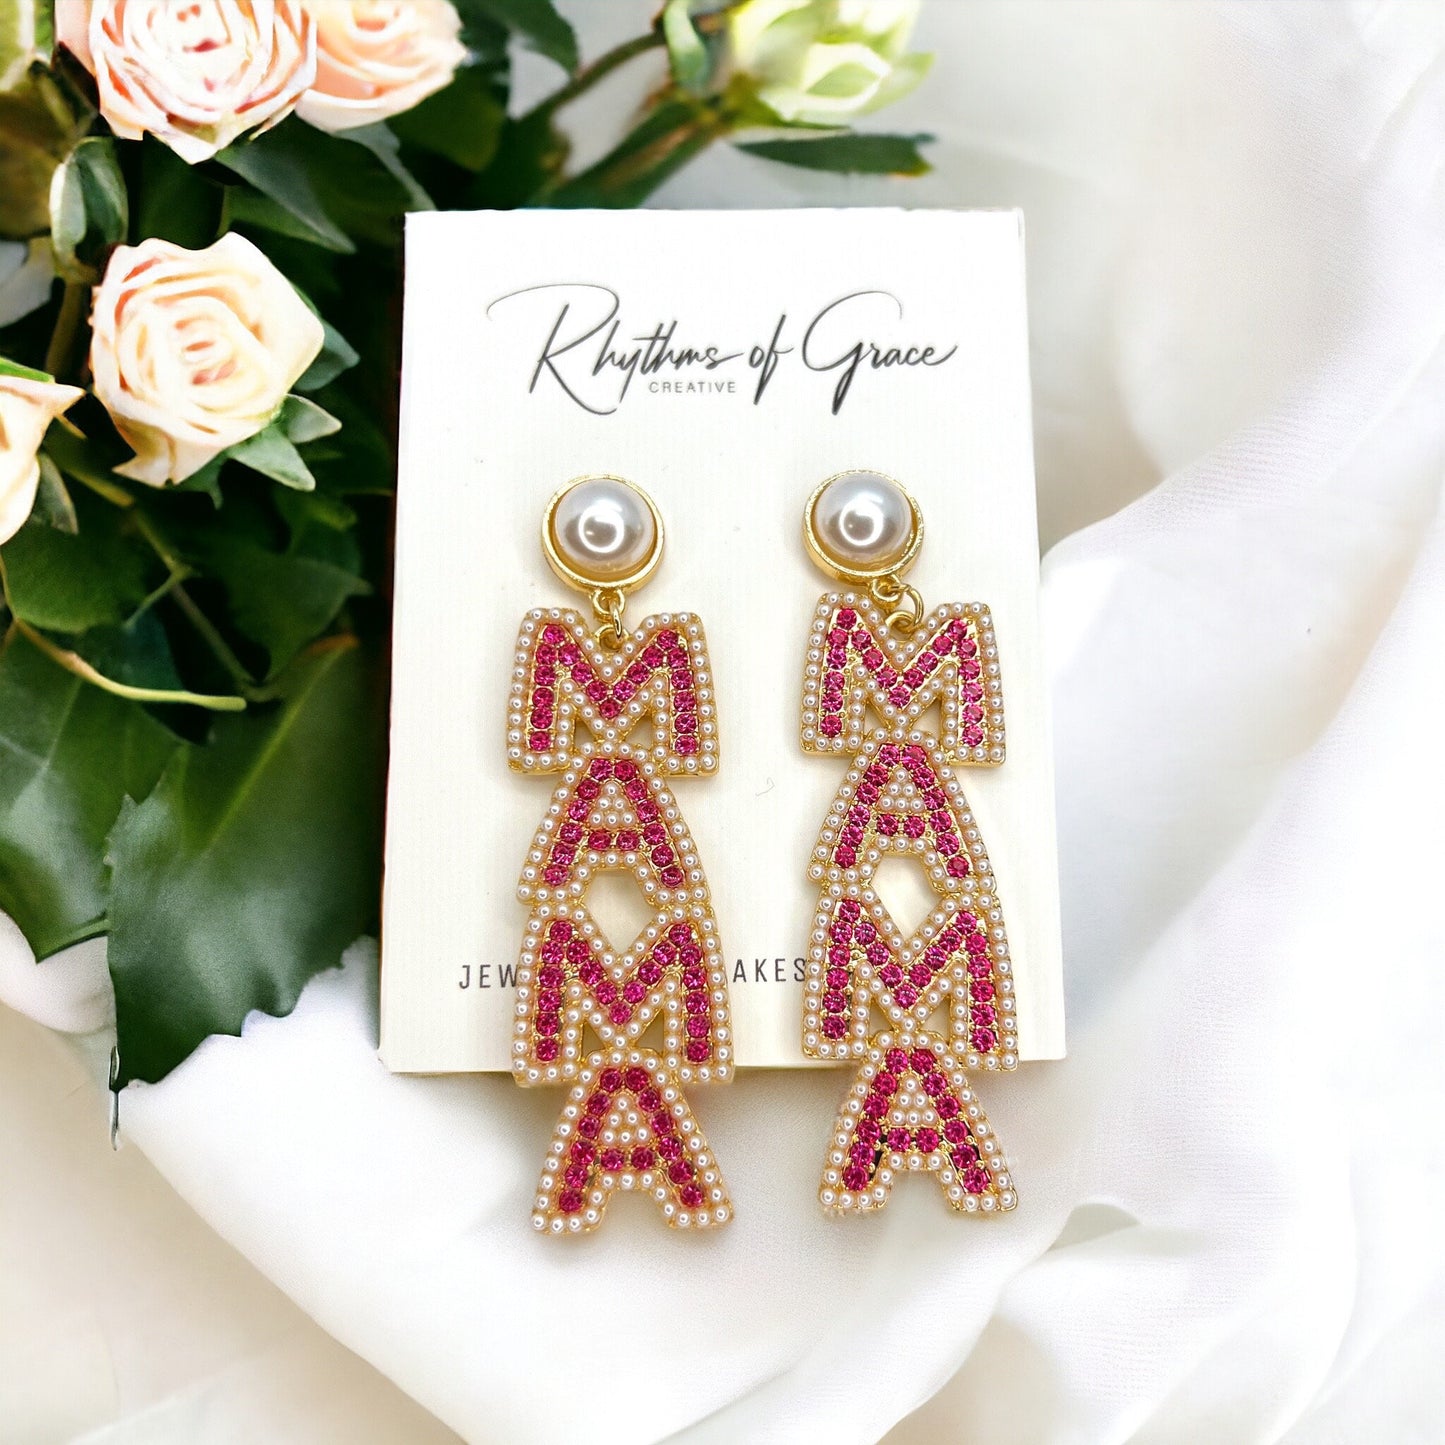 Rhinestone MAMA Earrings - Handmade Earrings, Baby Shower, New Mom, Mother’s Day, Mom Earringa, Momma Earrings, Pregnancy Announcement